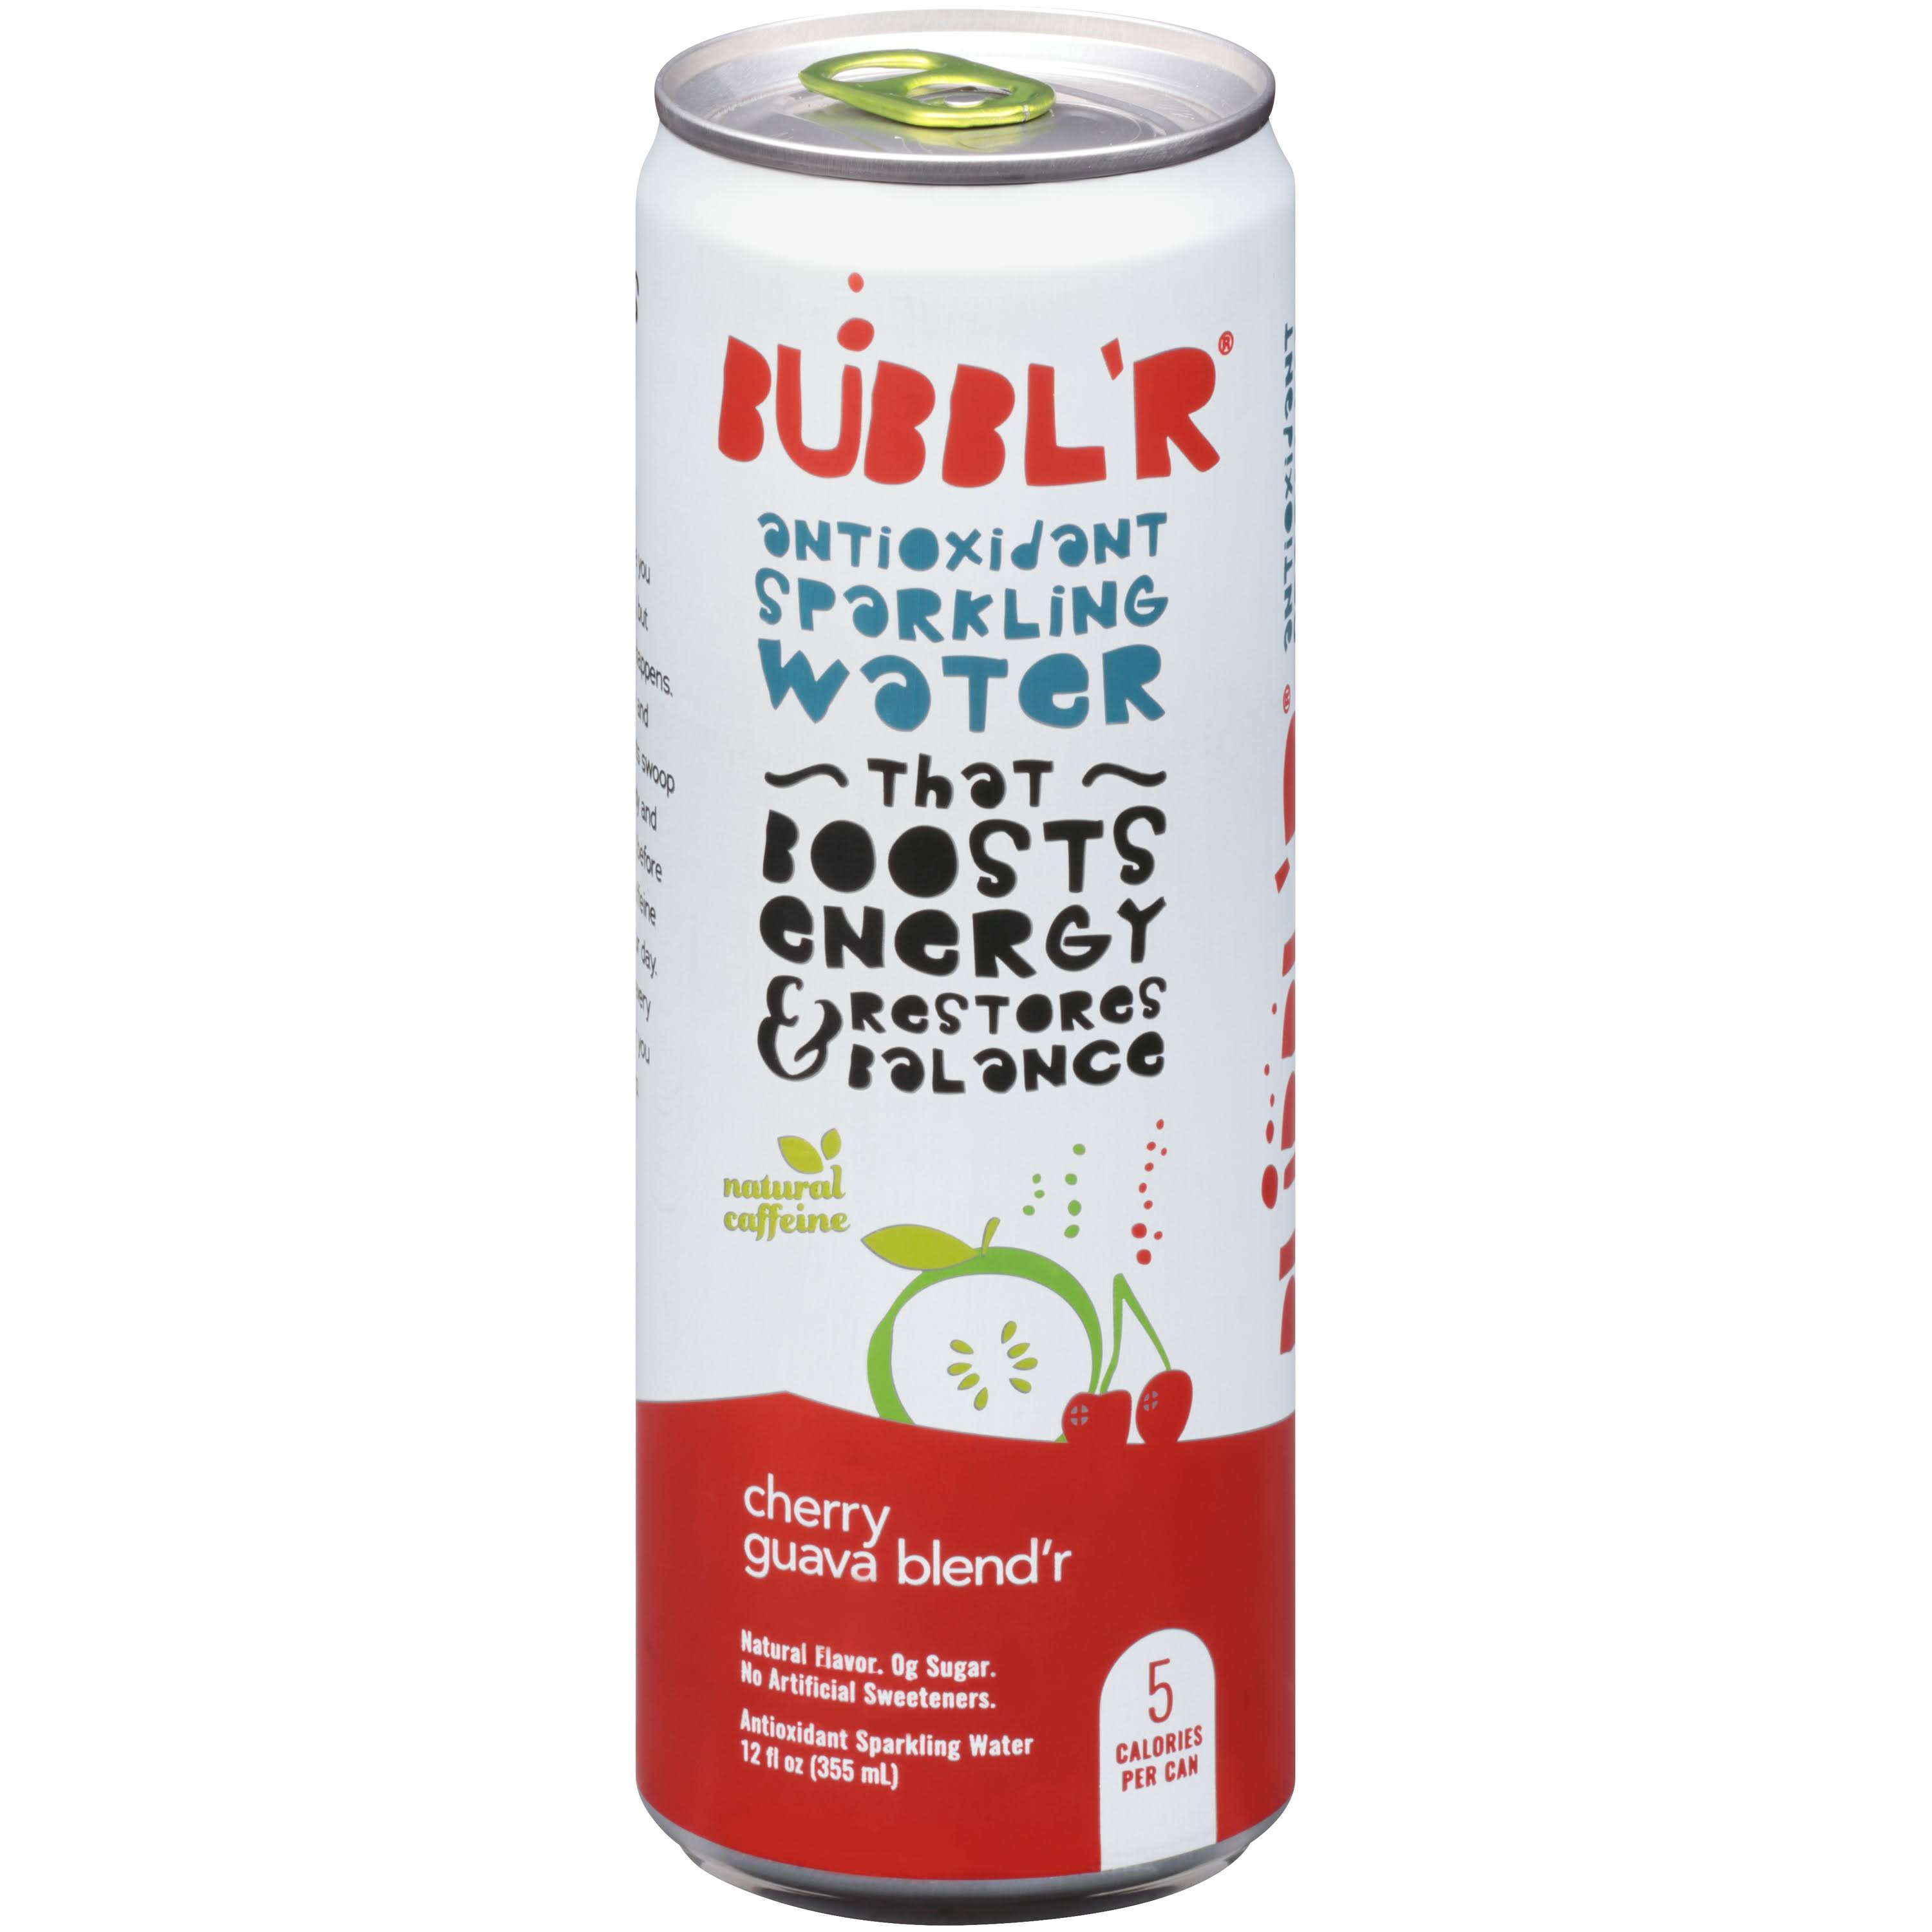 Bubblr Sparkling Water, Antioxidant, Cherry Guava Blend'r - 12 fl oz